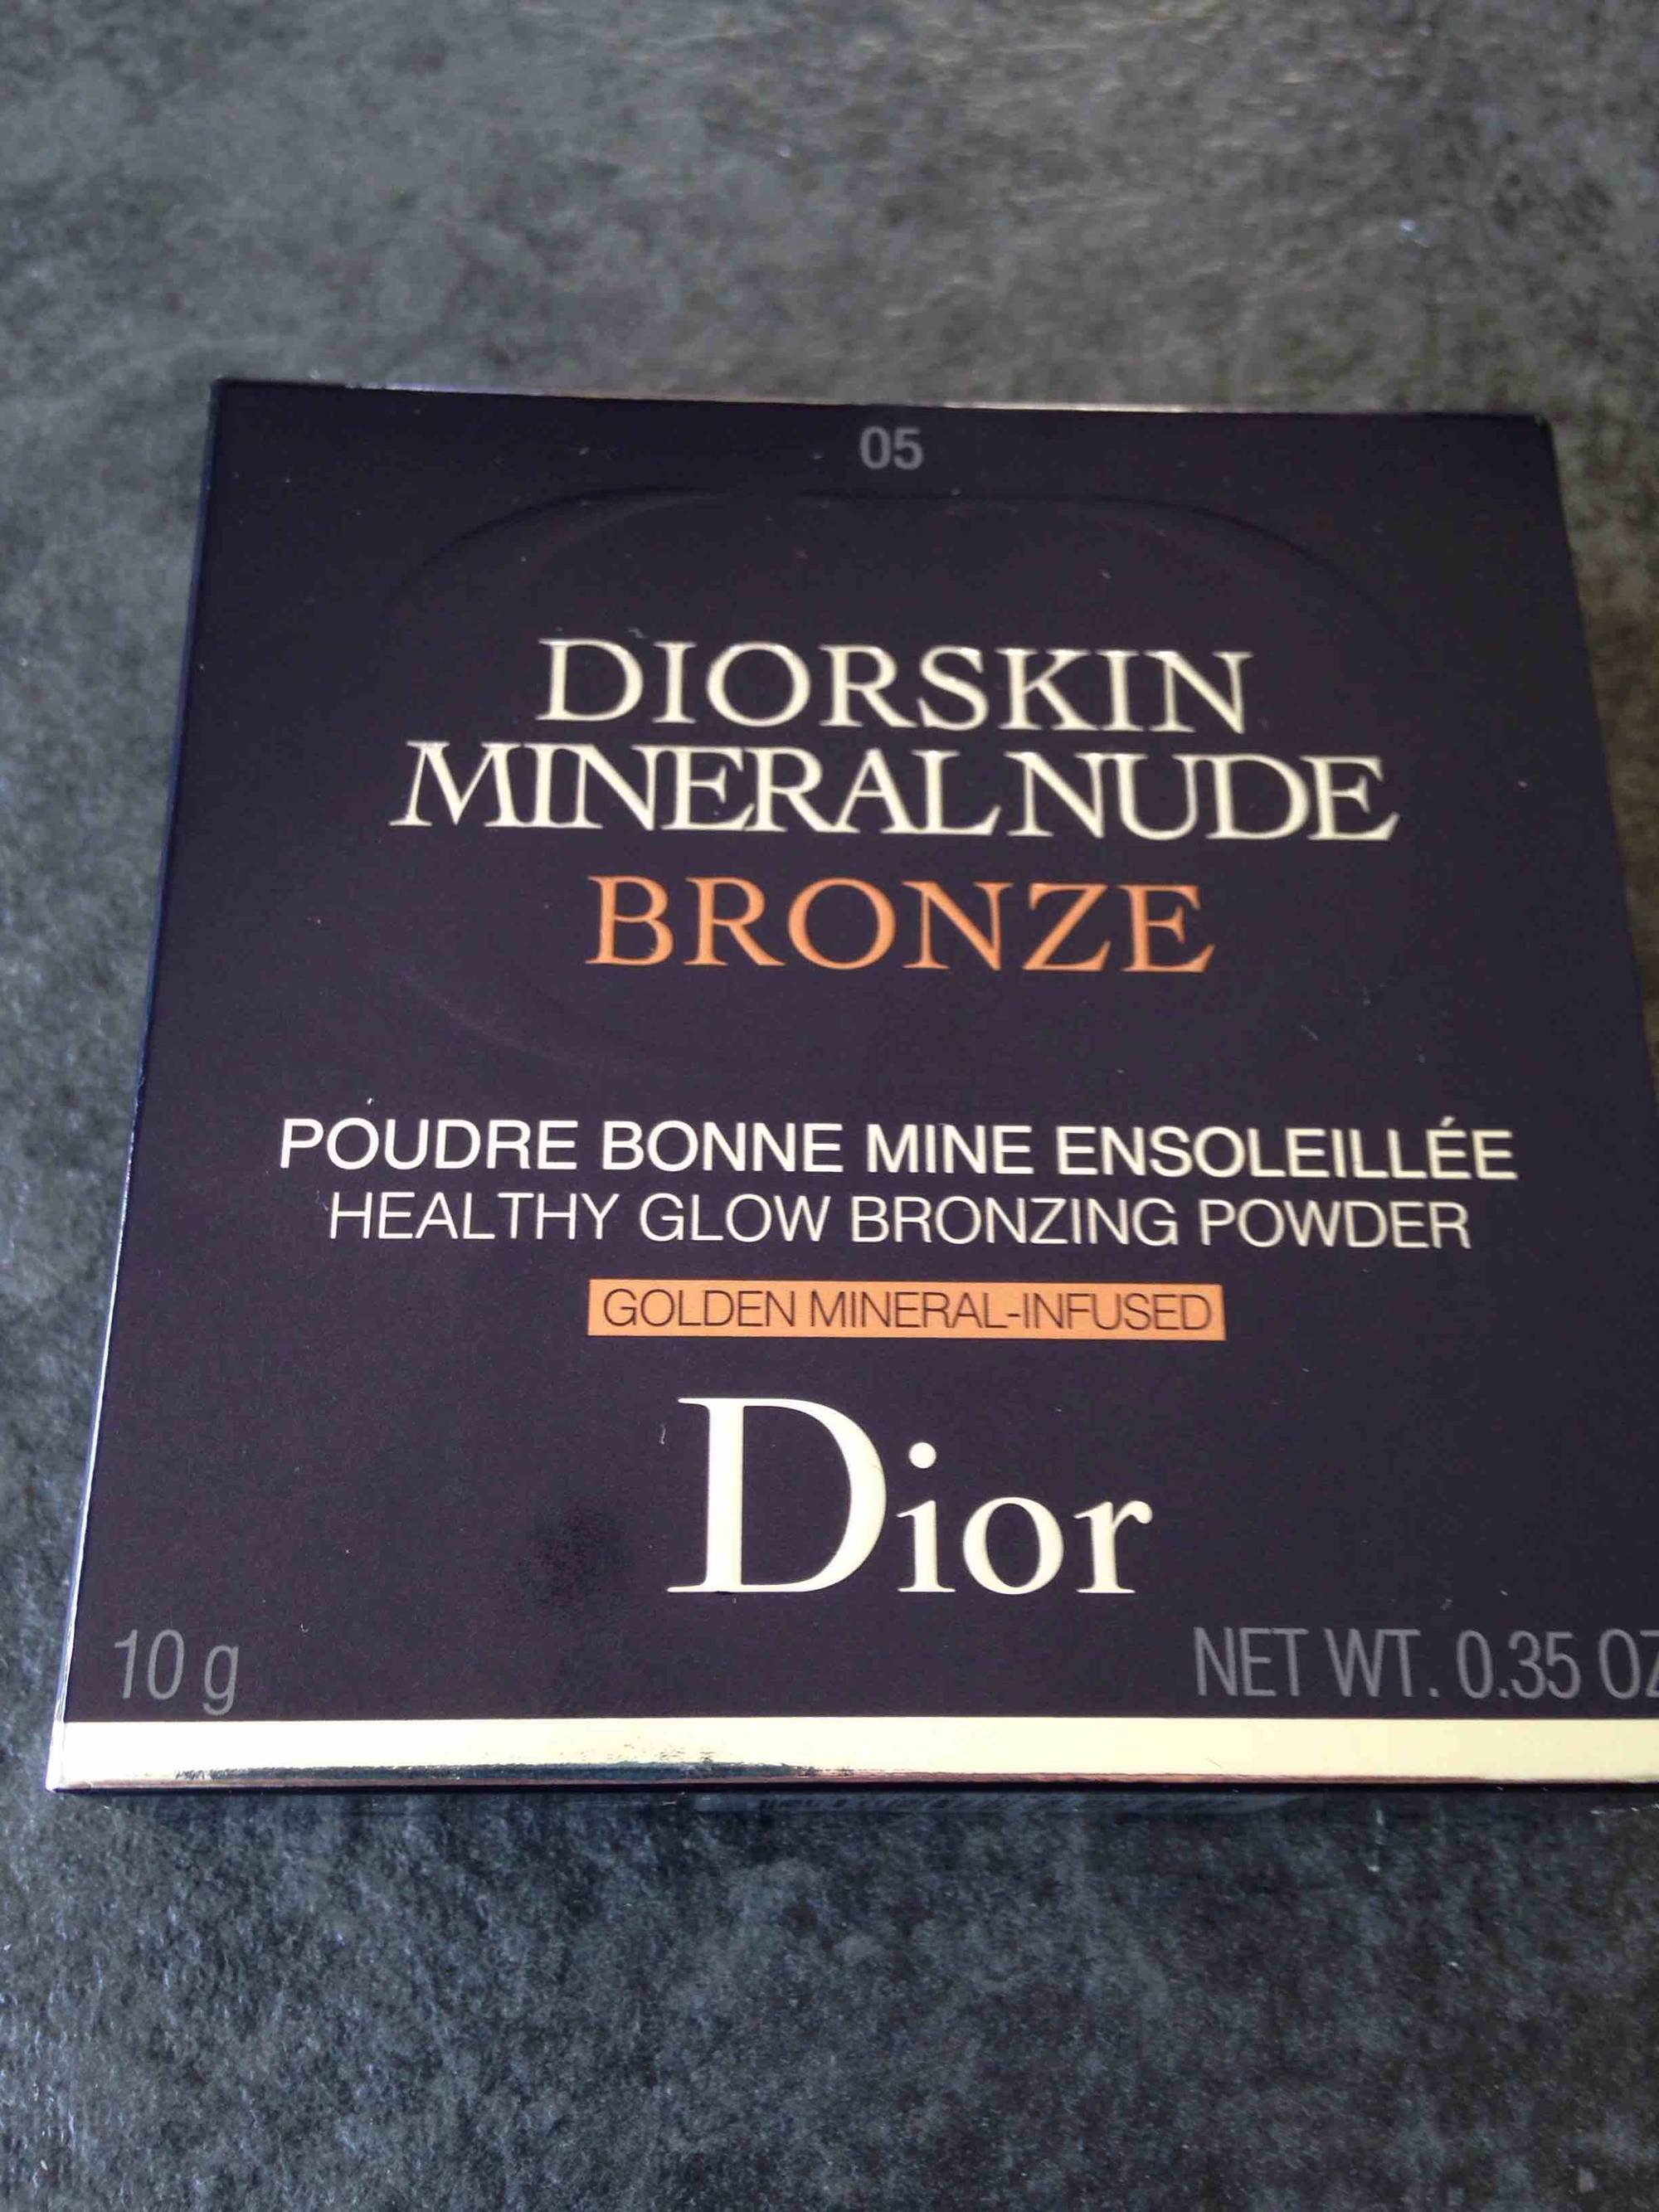 DIOR - Diorskin mineral nude bronze - Poudre bonne mine ensoleillé